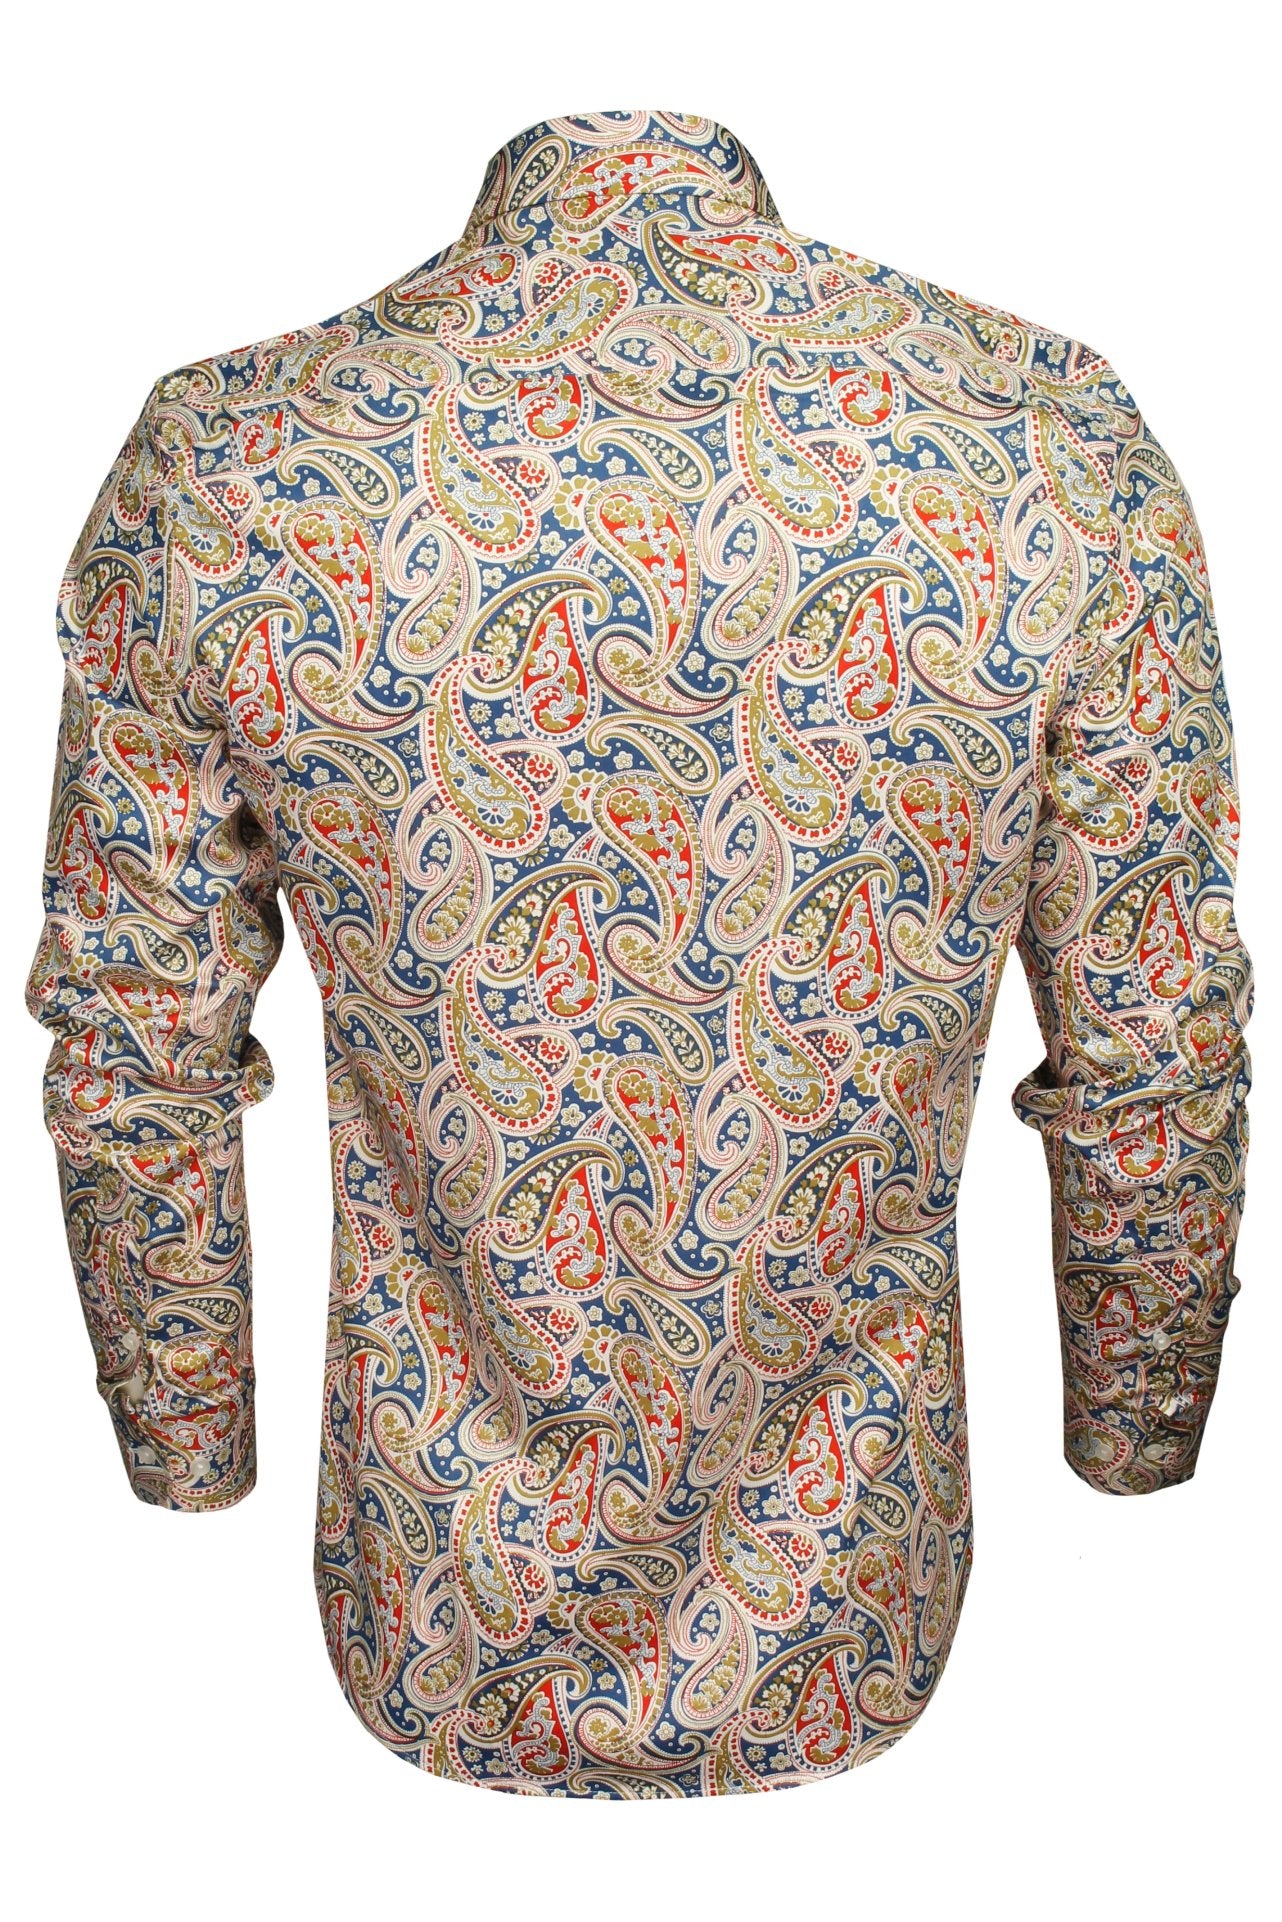 Xact Mens Paisley Digital Print Shirt - Long Sleeved-3